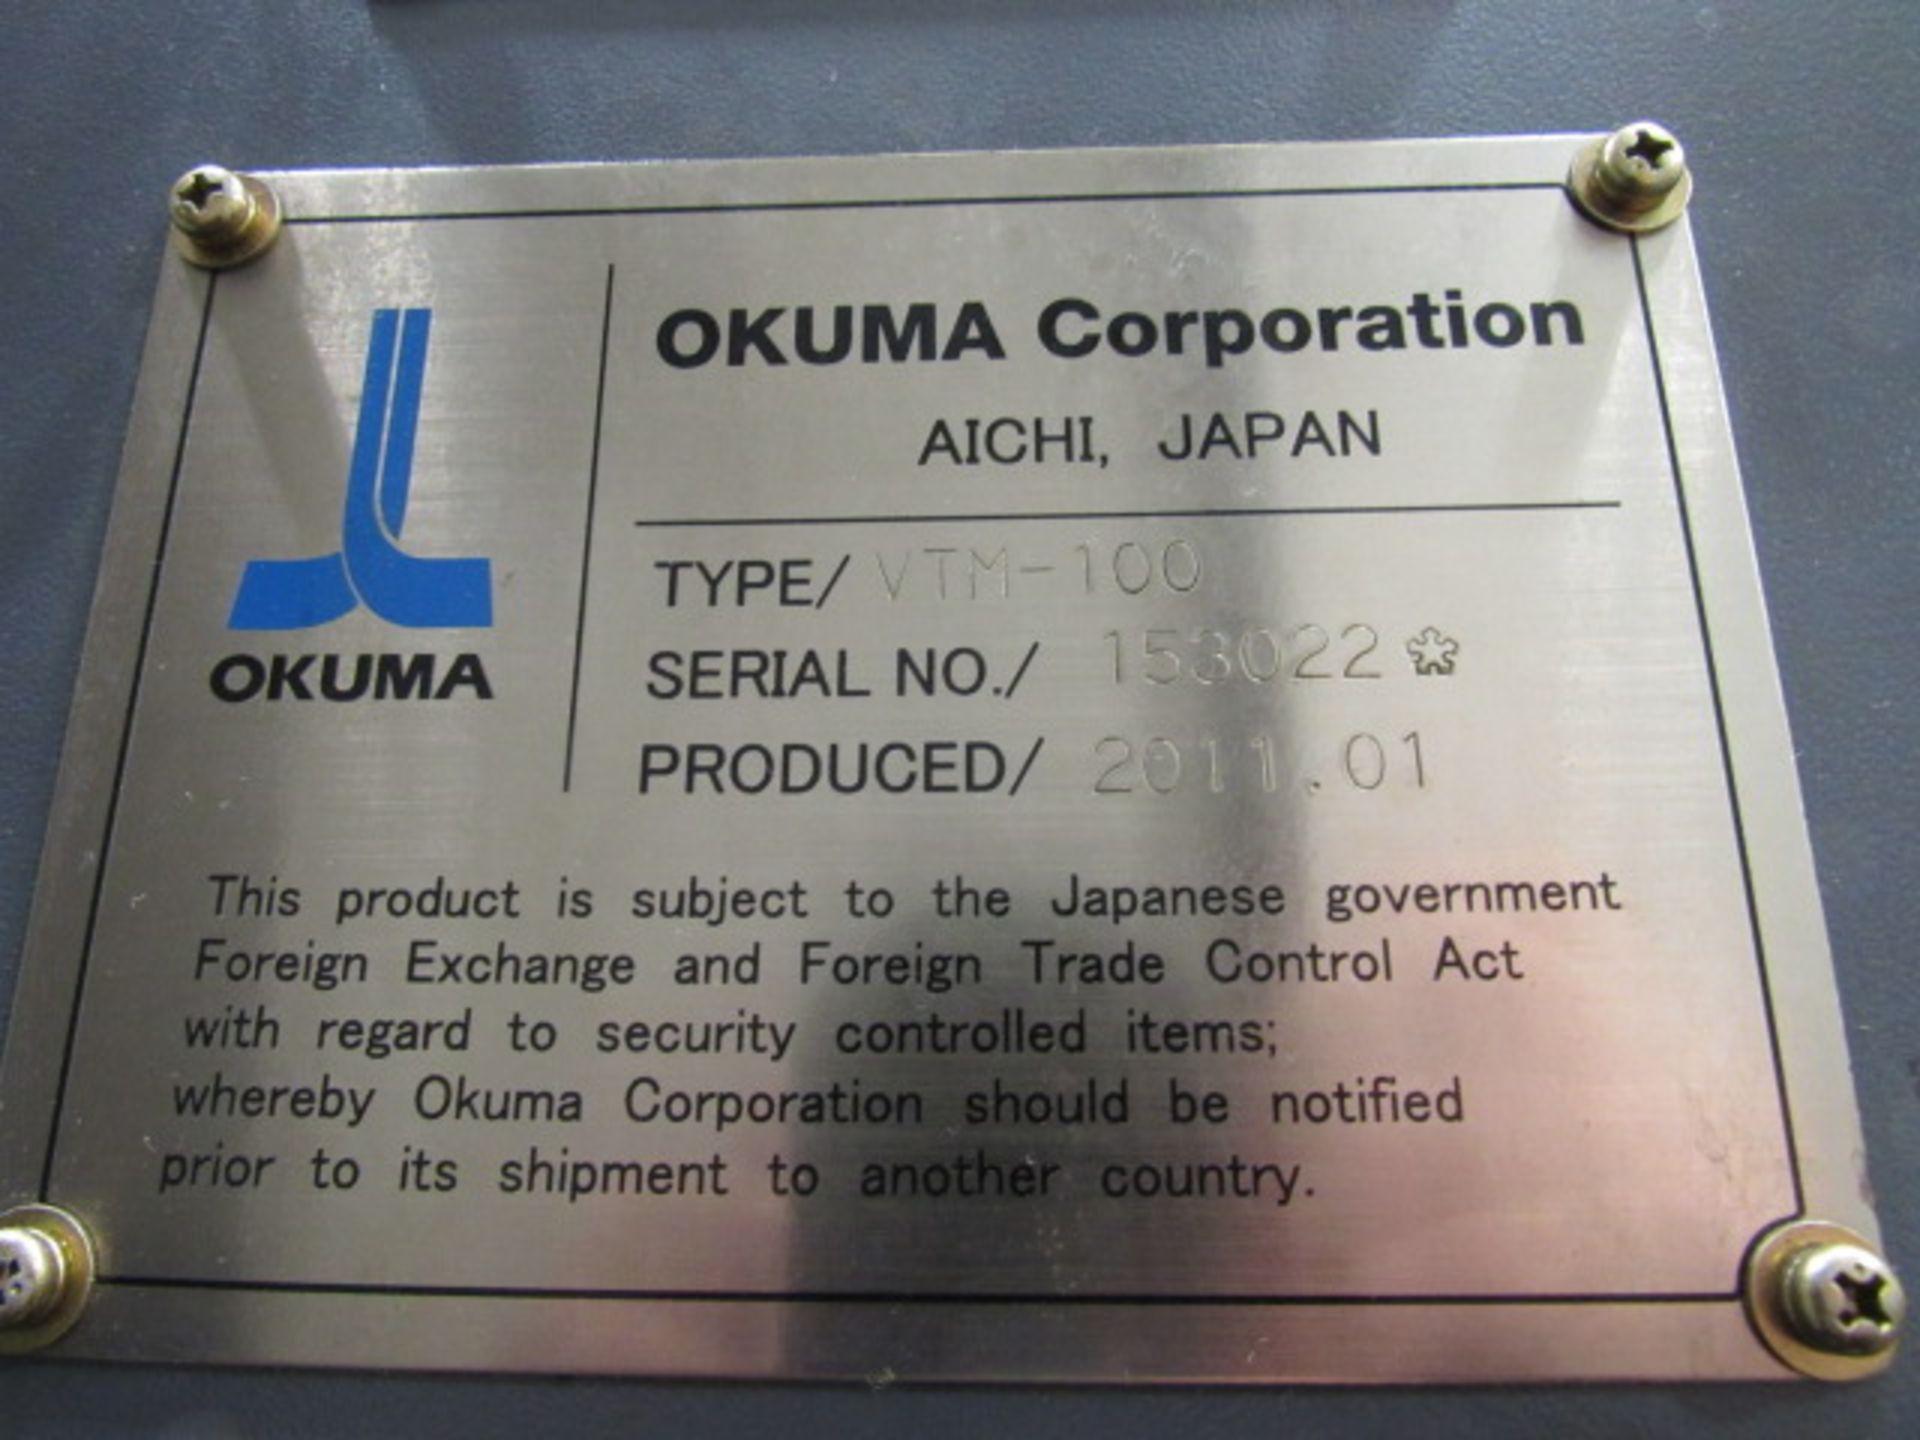 Okuma VTM-100 CNC Vertical Turning Center with Live Milling - Image 9 of 9